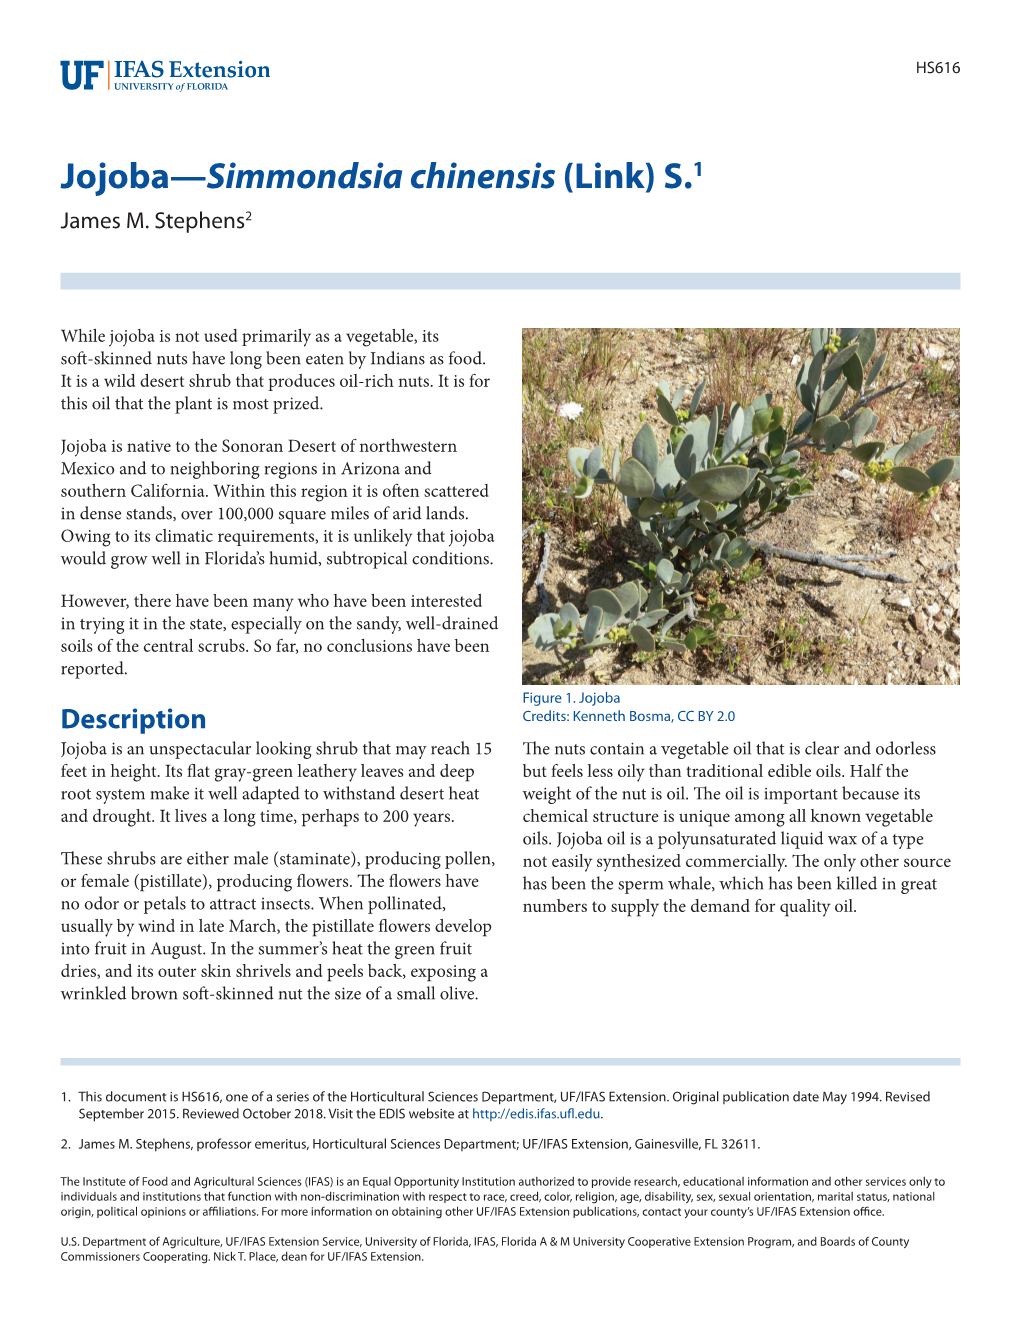 Jojoba—Simmondsia Chinensis (Link) S.1 James M